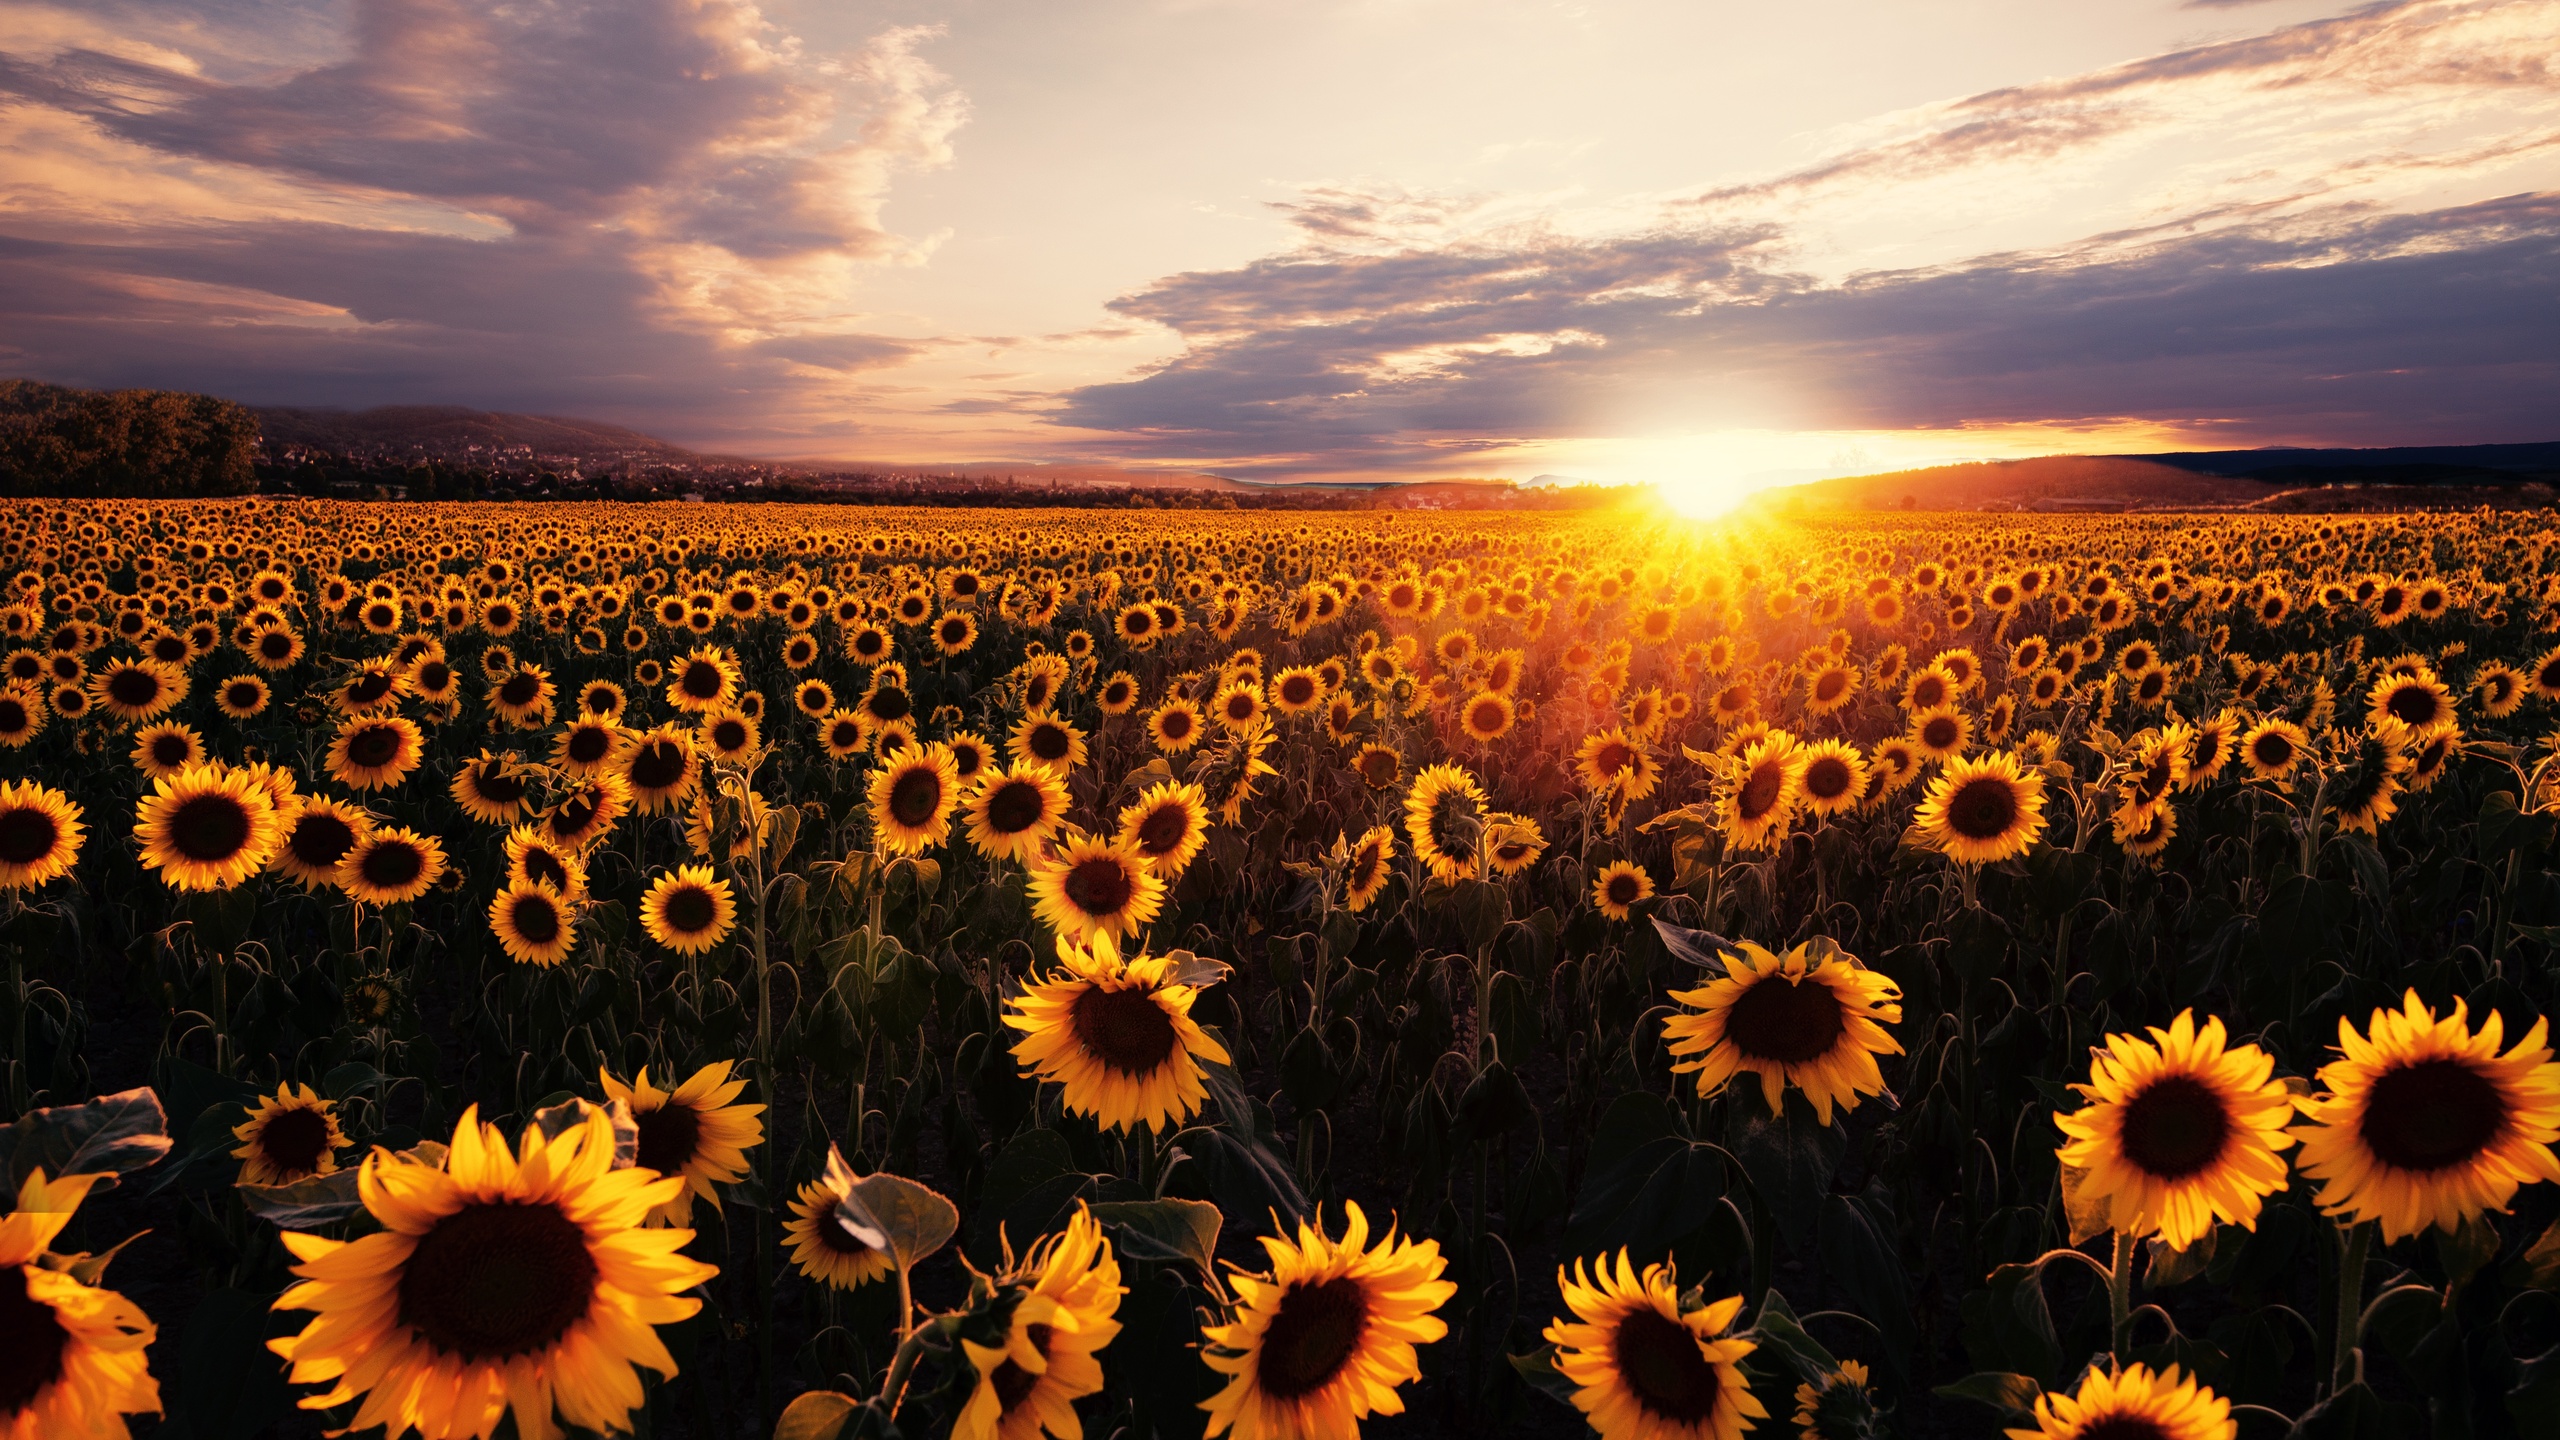 2560x1440 Sunflowers Field Sunrise 5k 1440p Resolution Hd 4k